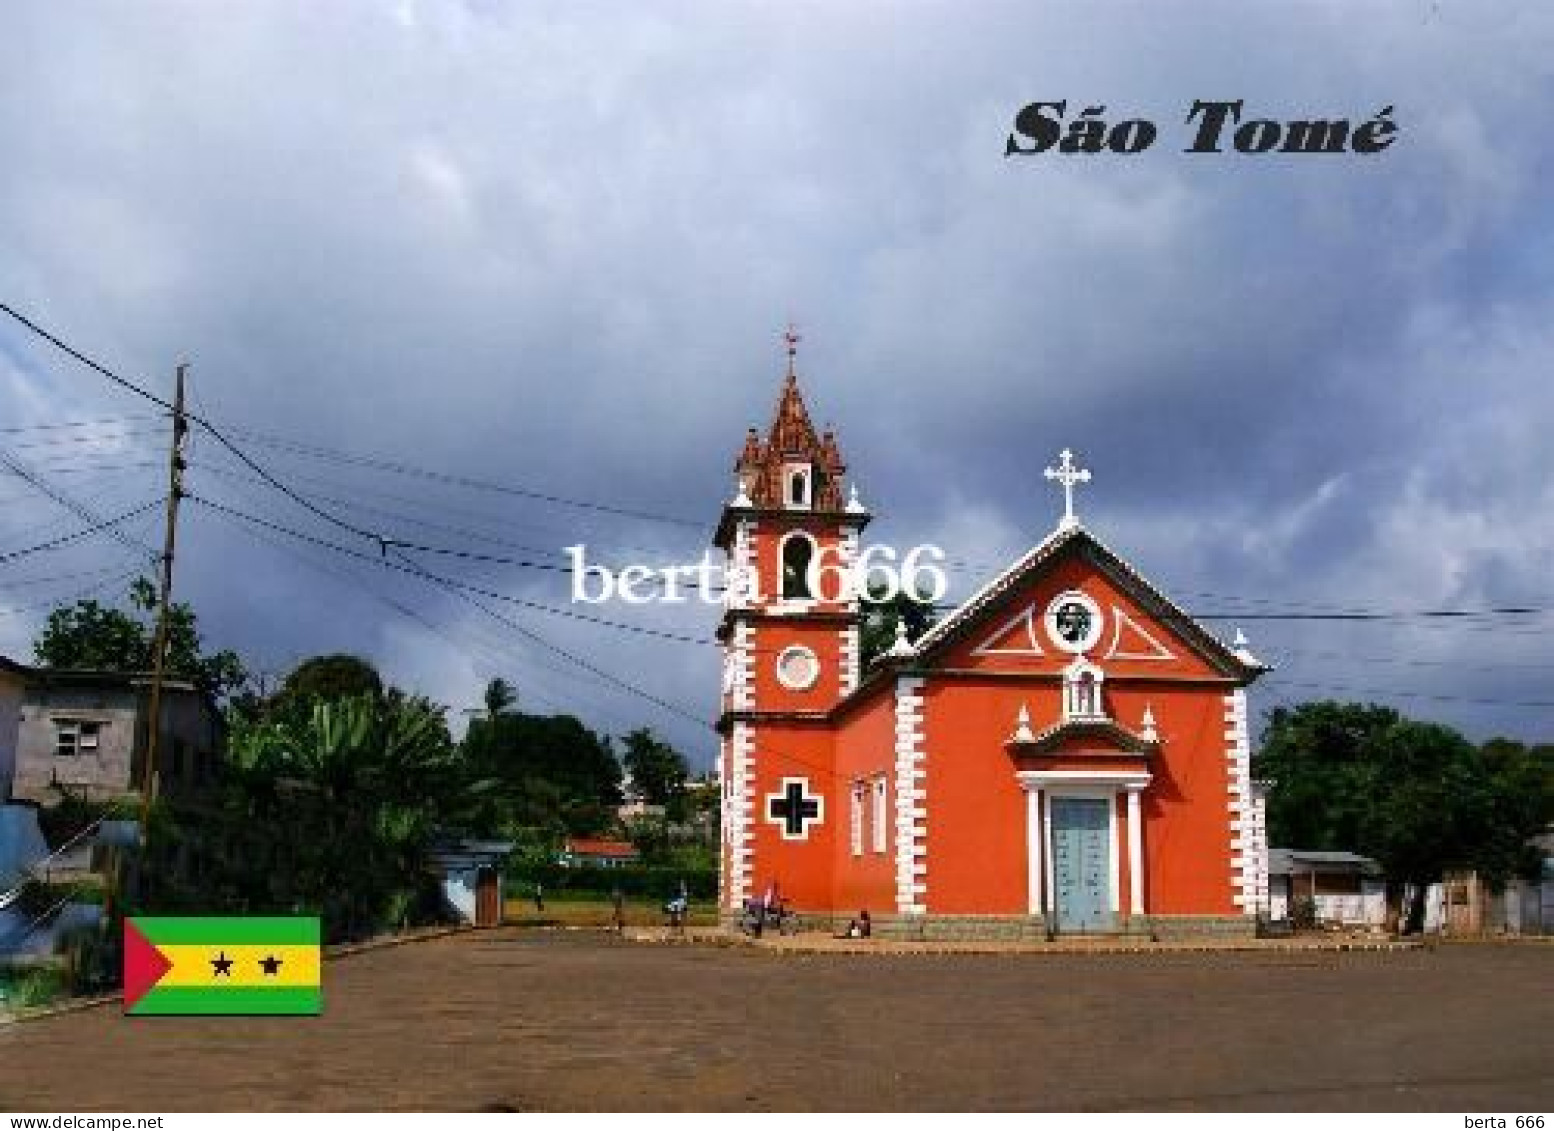 Sao Tome And Principe Pantufo St. Peter Church New Postcard - Santo Tomé Y Príncipe